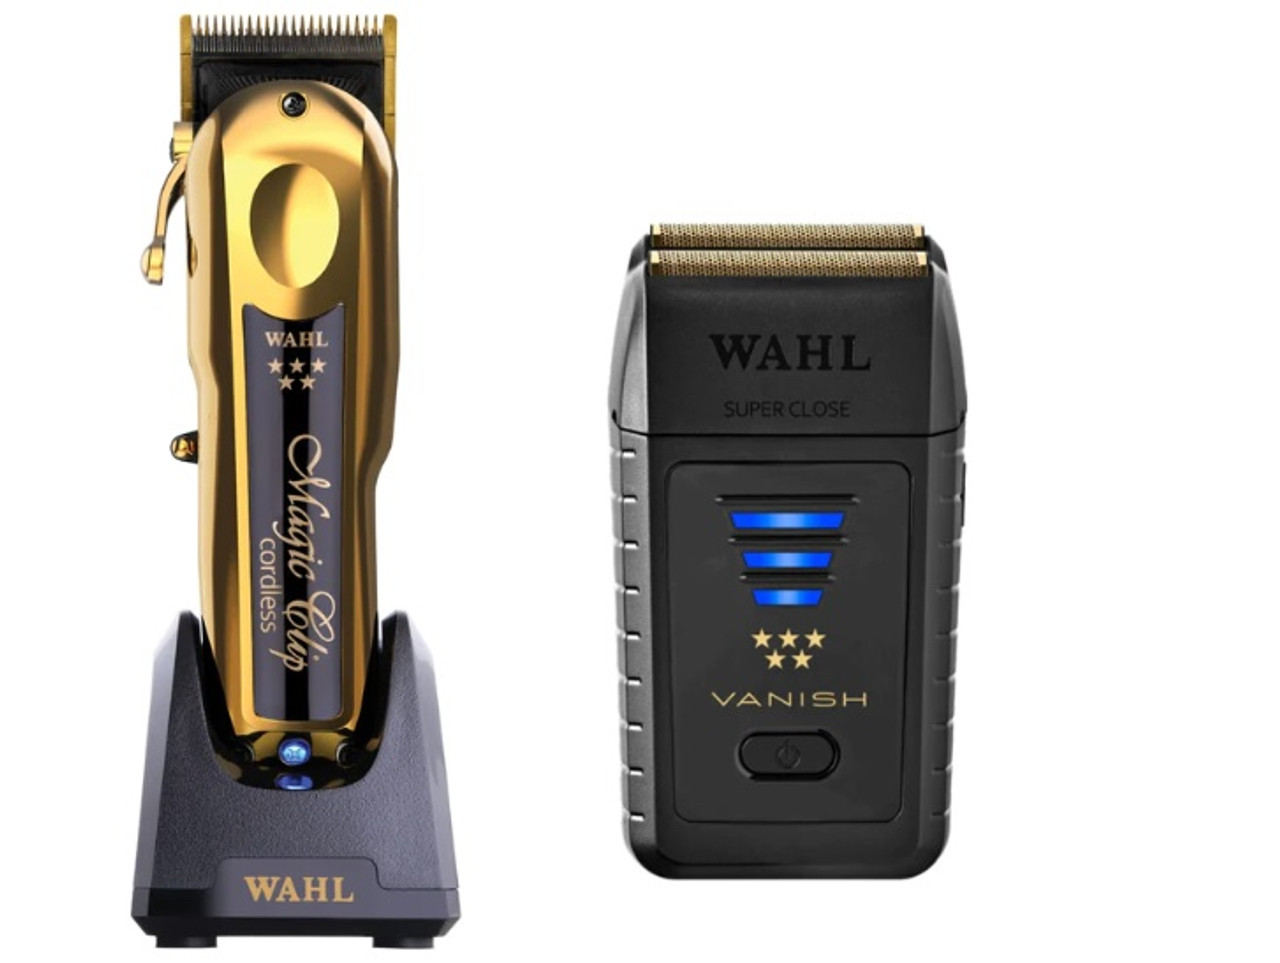 Wahl Gold Magic Clip Cordless & Vanish Shaver Duo - Barber Salon